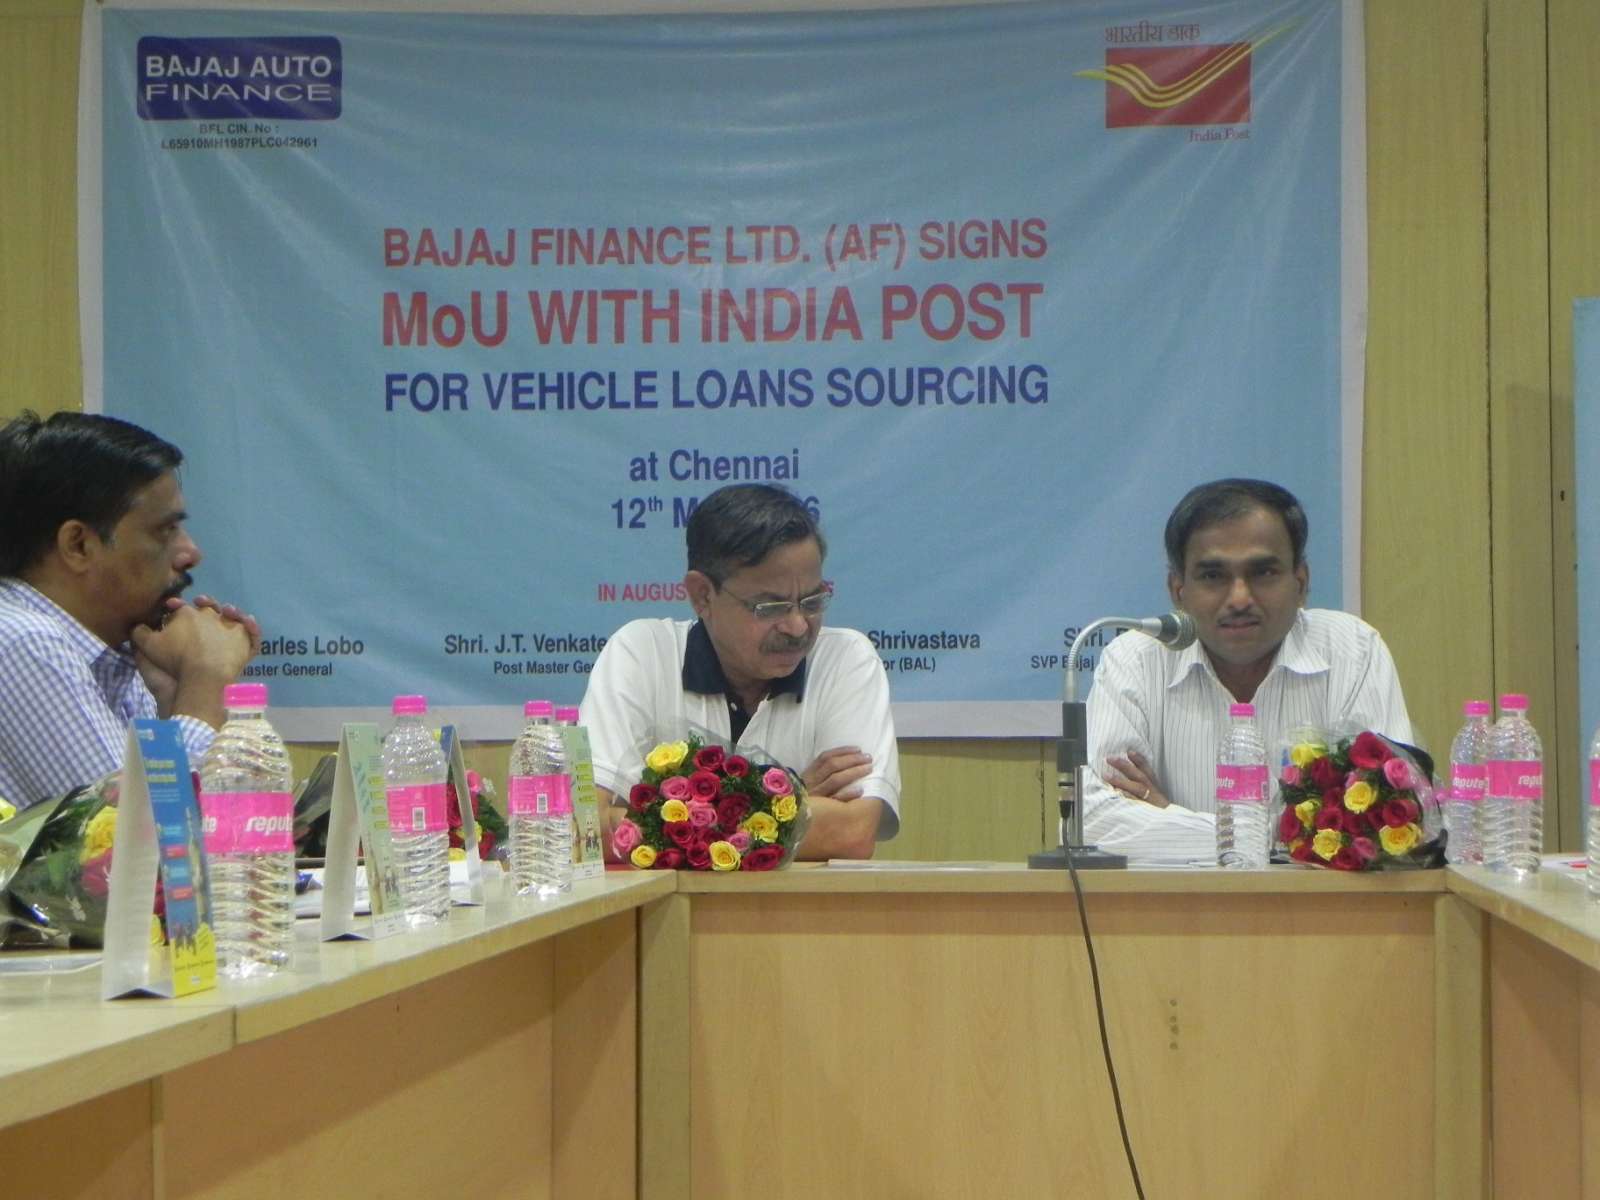 Bajaj Auto Finance ties up with India Post (1)